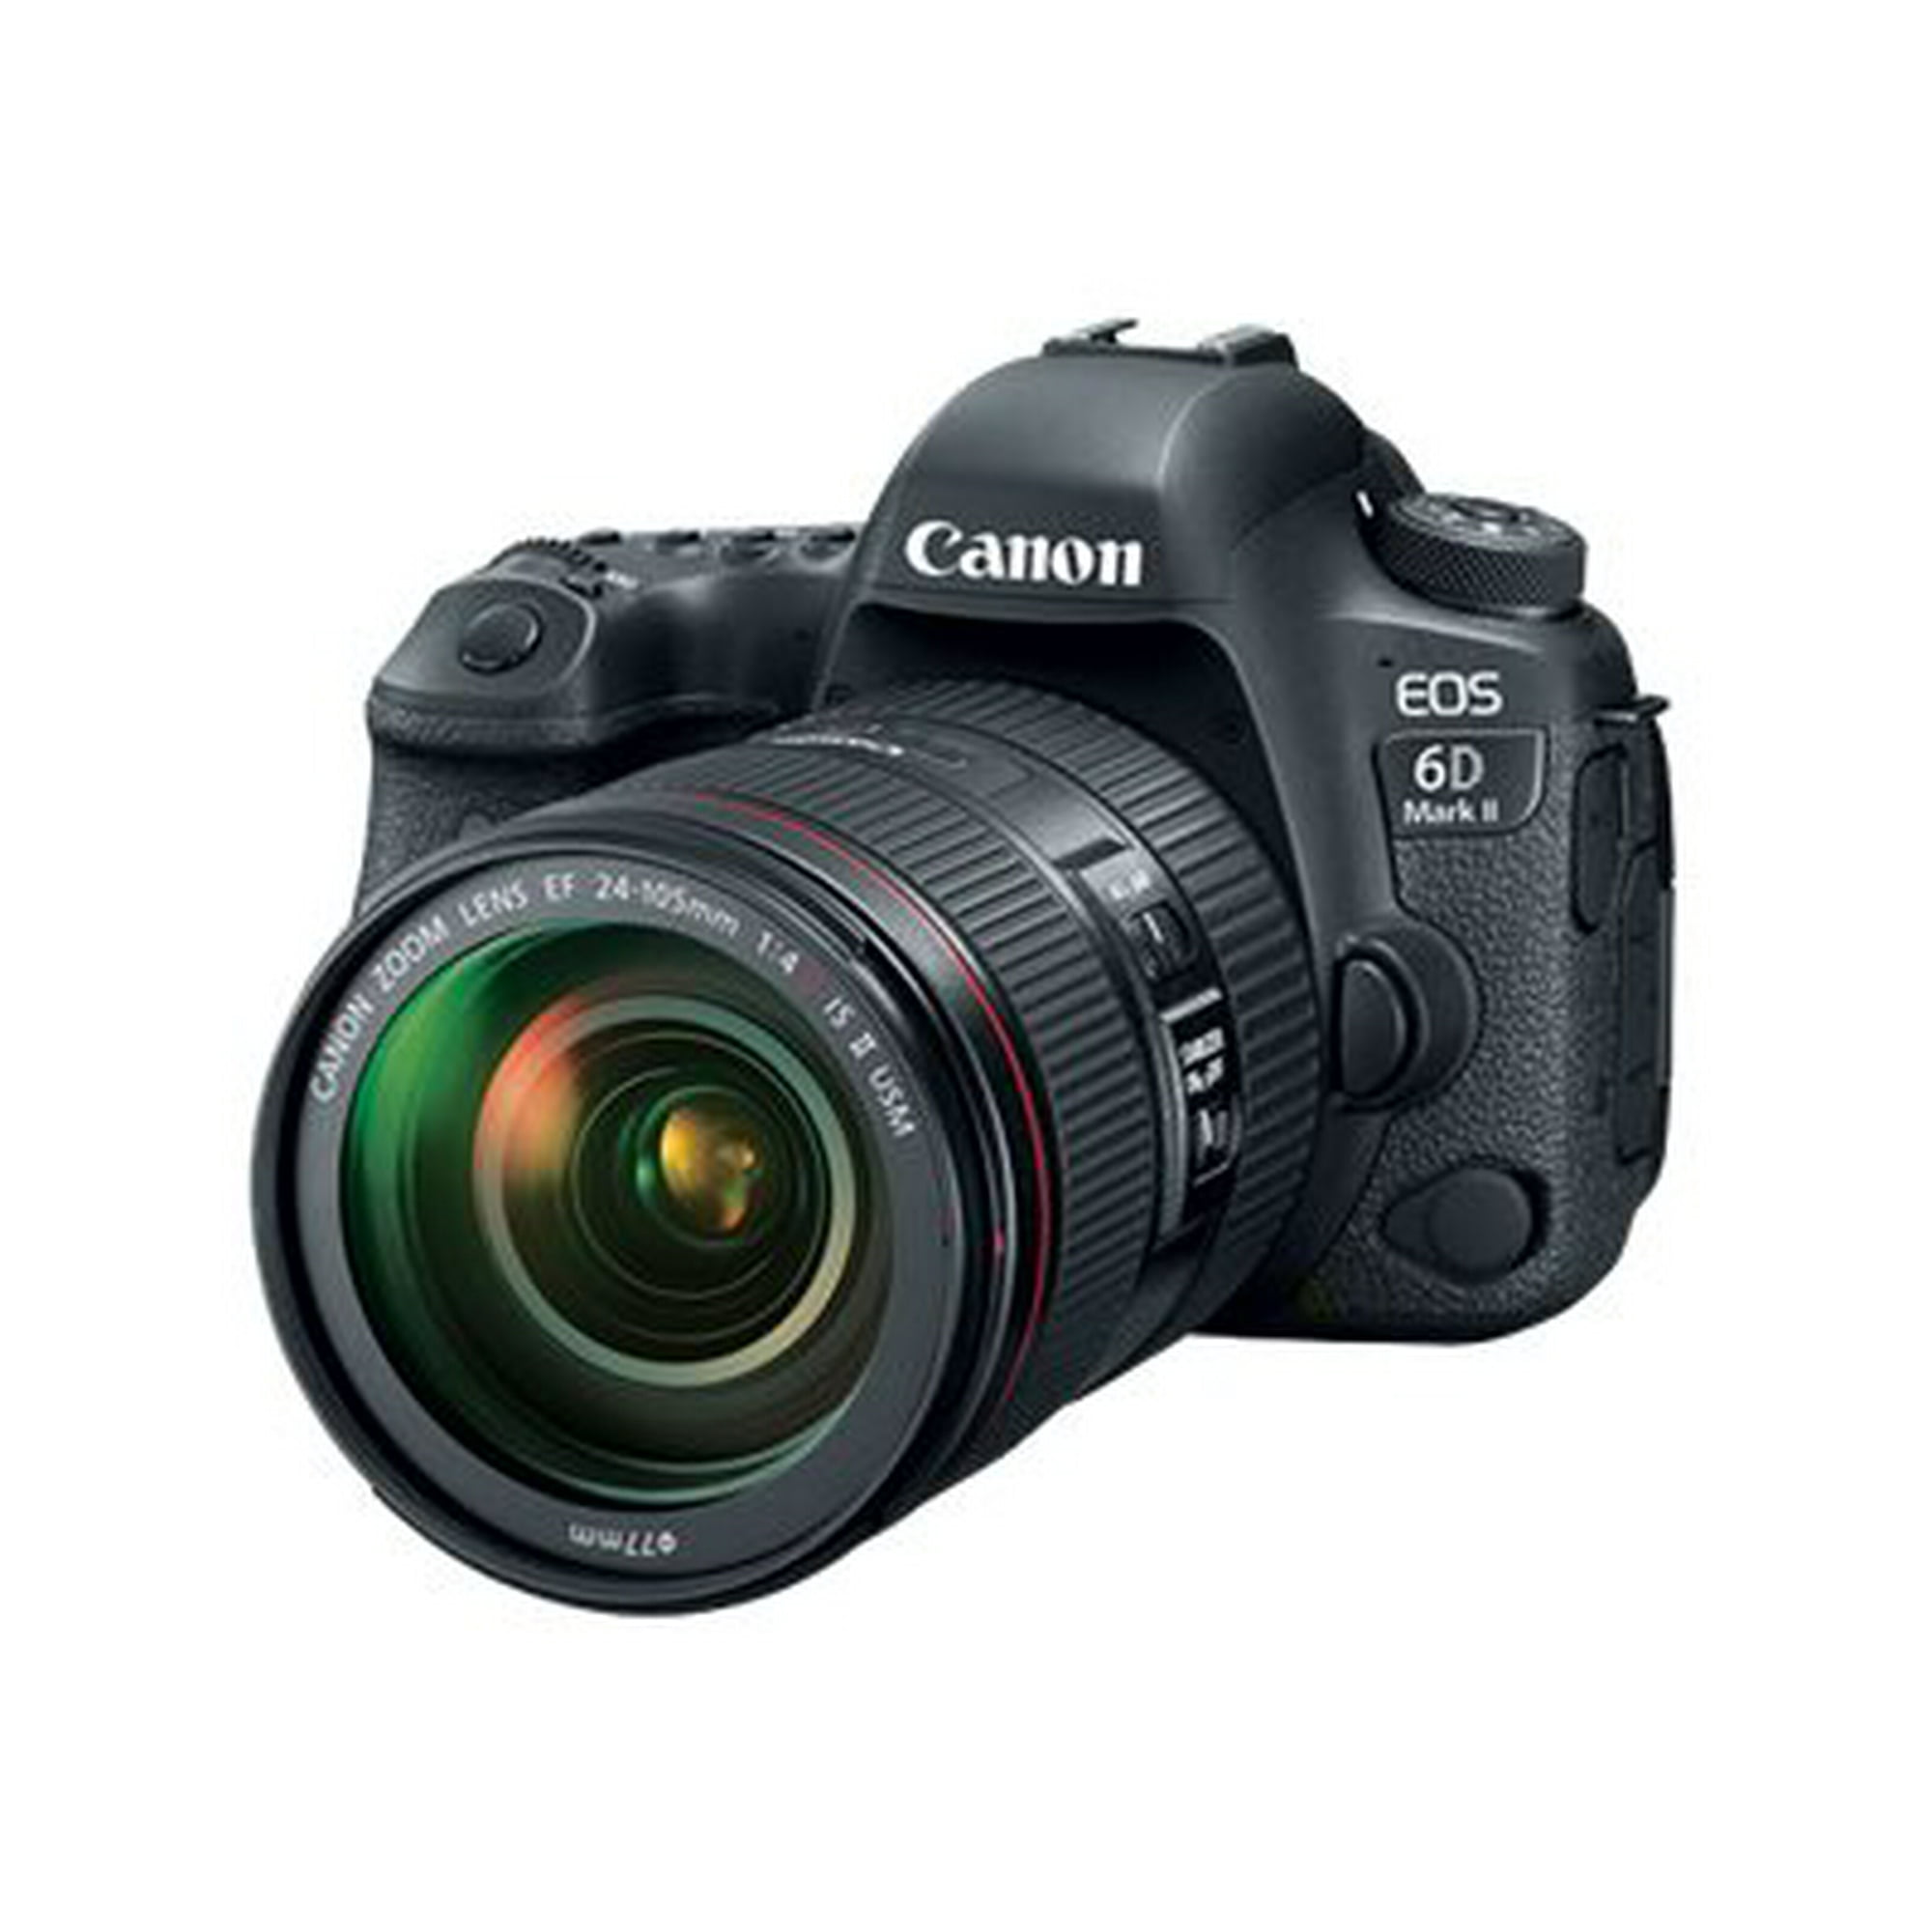 Canon EOS 6D Mark II - Digital camera - SLR - 26.2 MP - Full Frame - 1080p  / 60 fps - 4.3x optical zoom EF 24-105mm F/4 L IS II USM lens - Wi-Fi, NFC, 